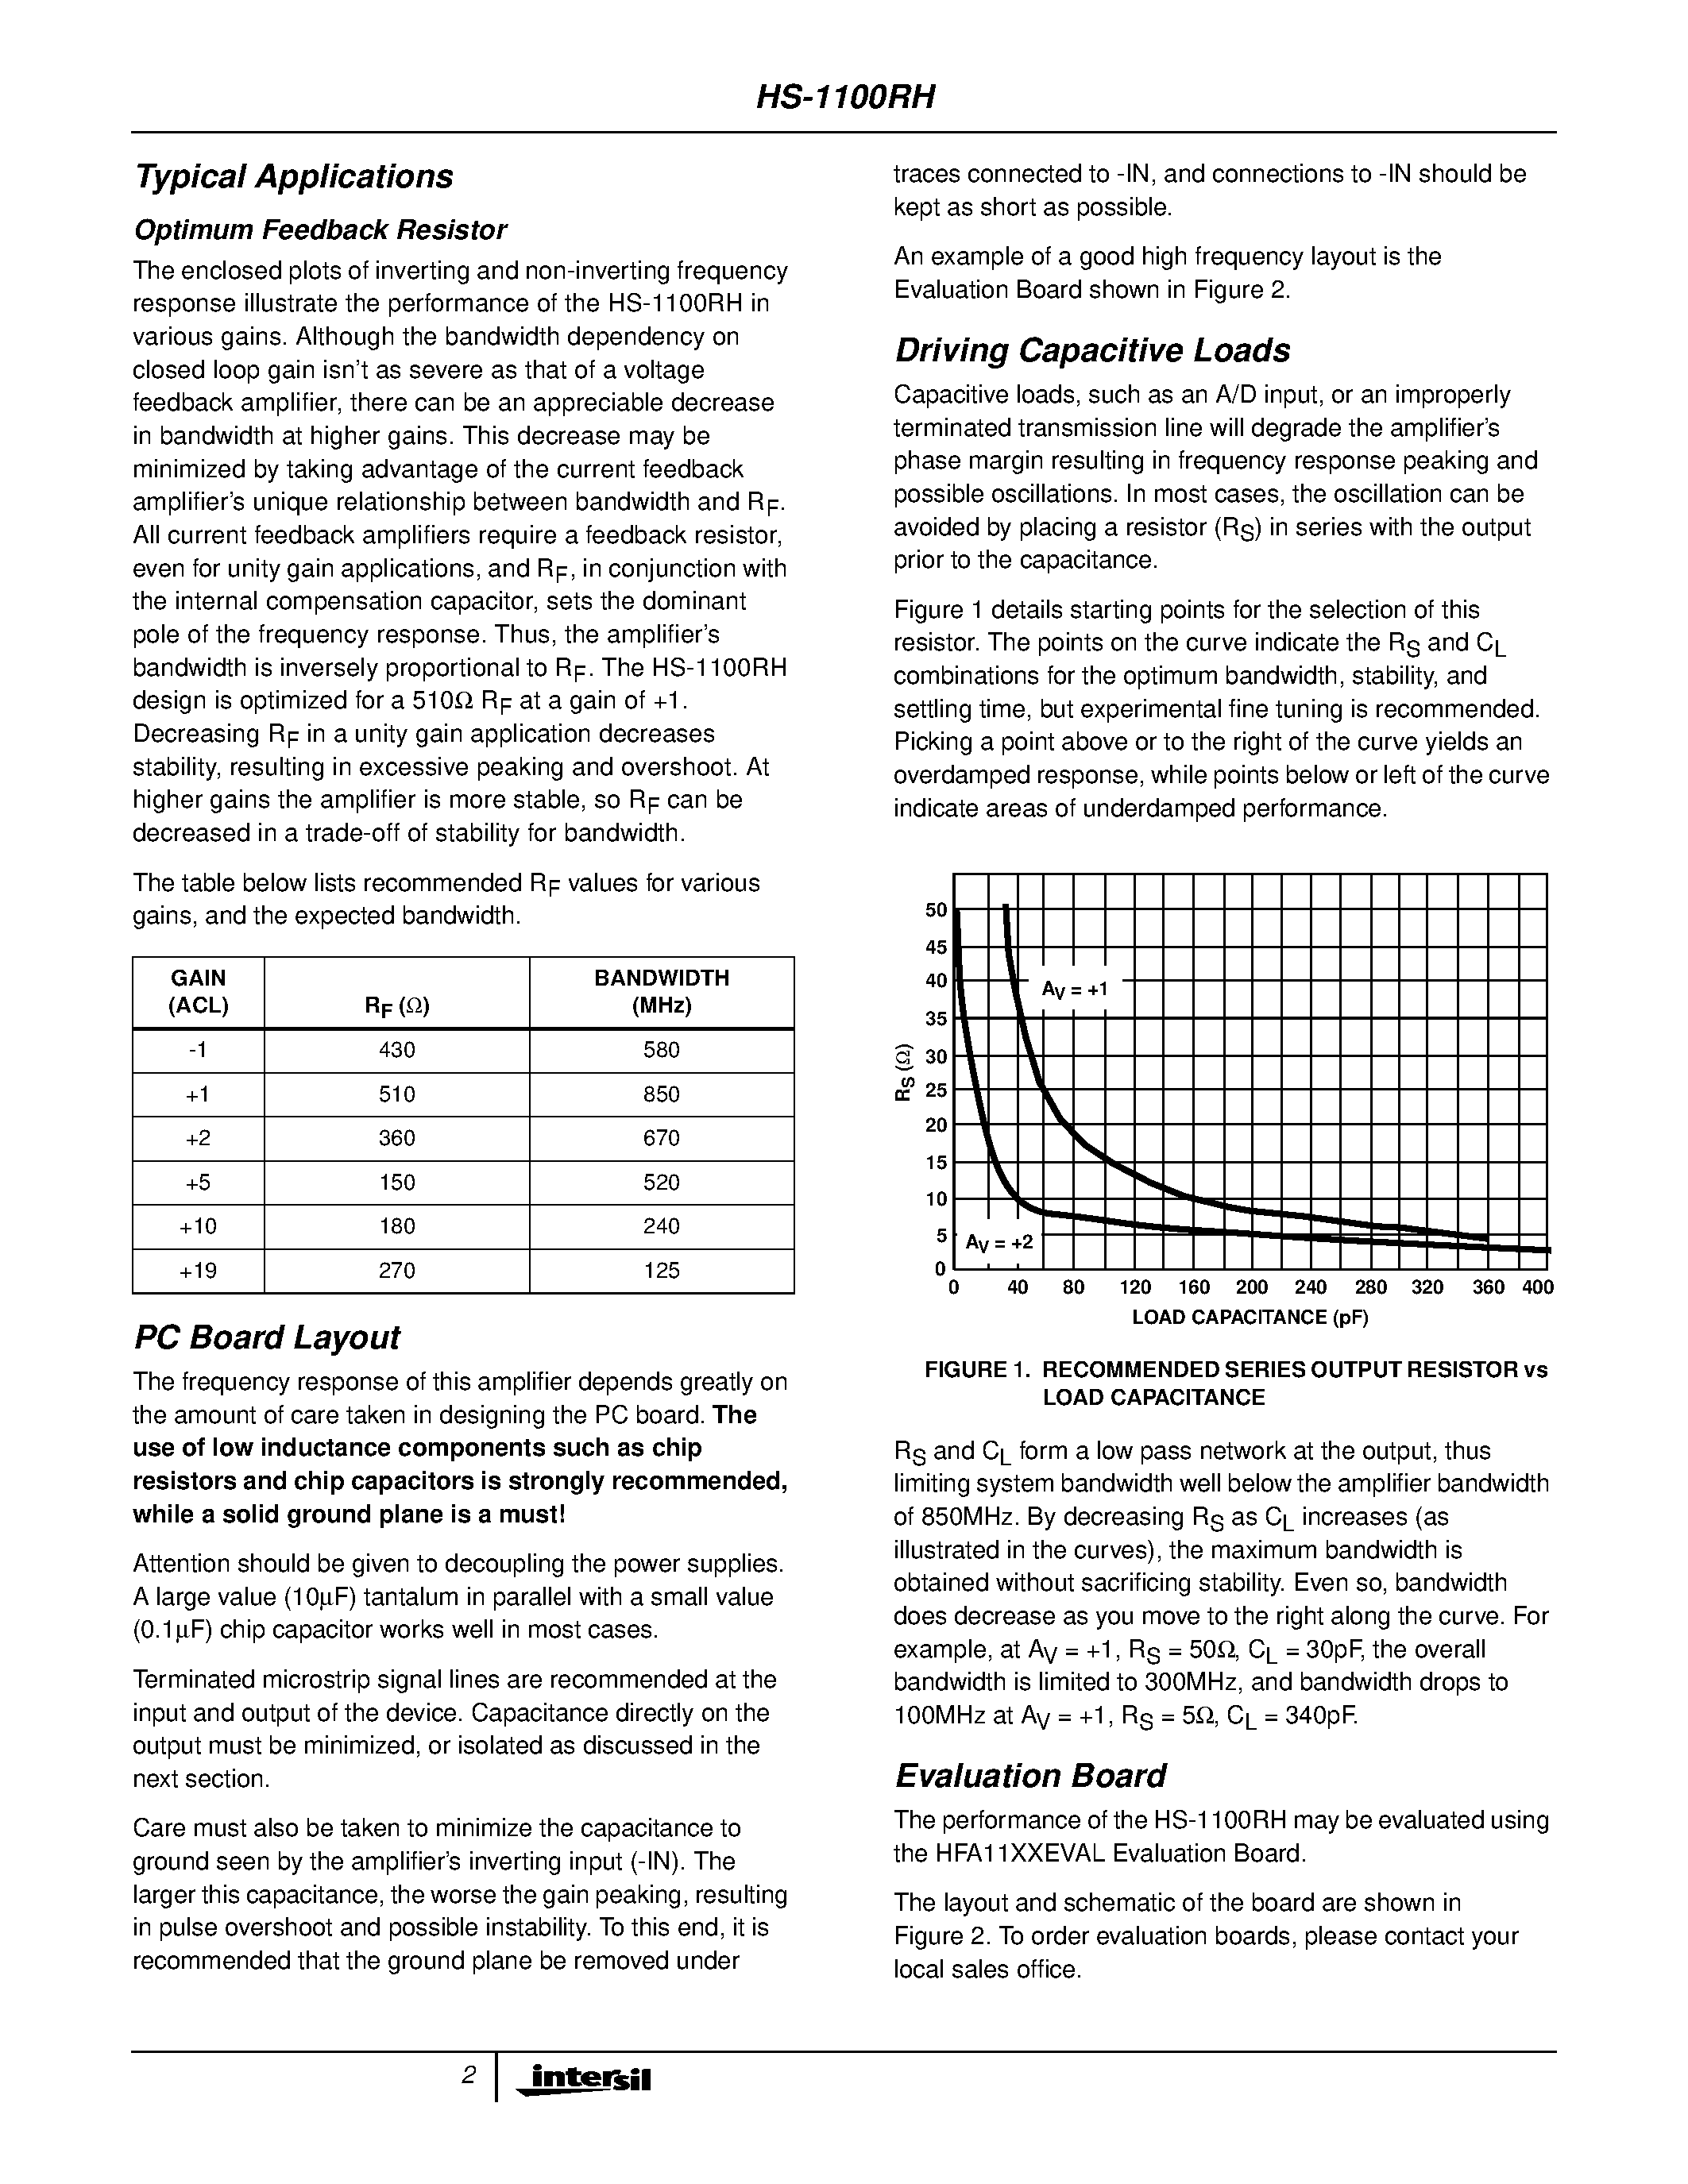 Даташит HS7-1100RH-Q - Radiation Hardened/ Ultra High Speed Current Feedback Amplifier страница 2